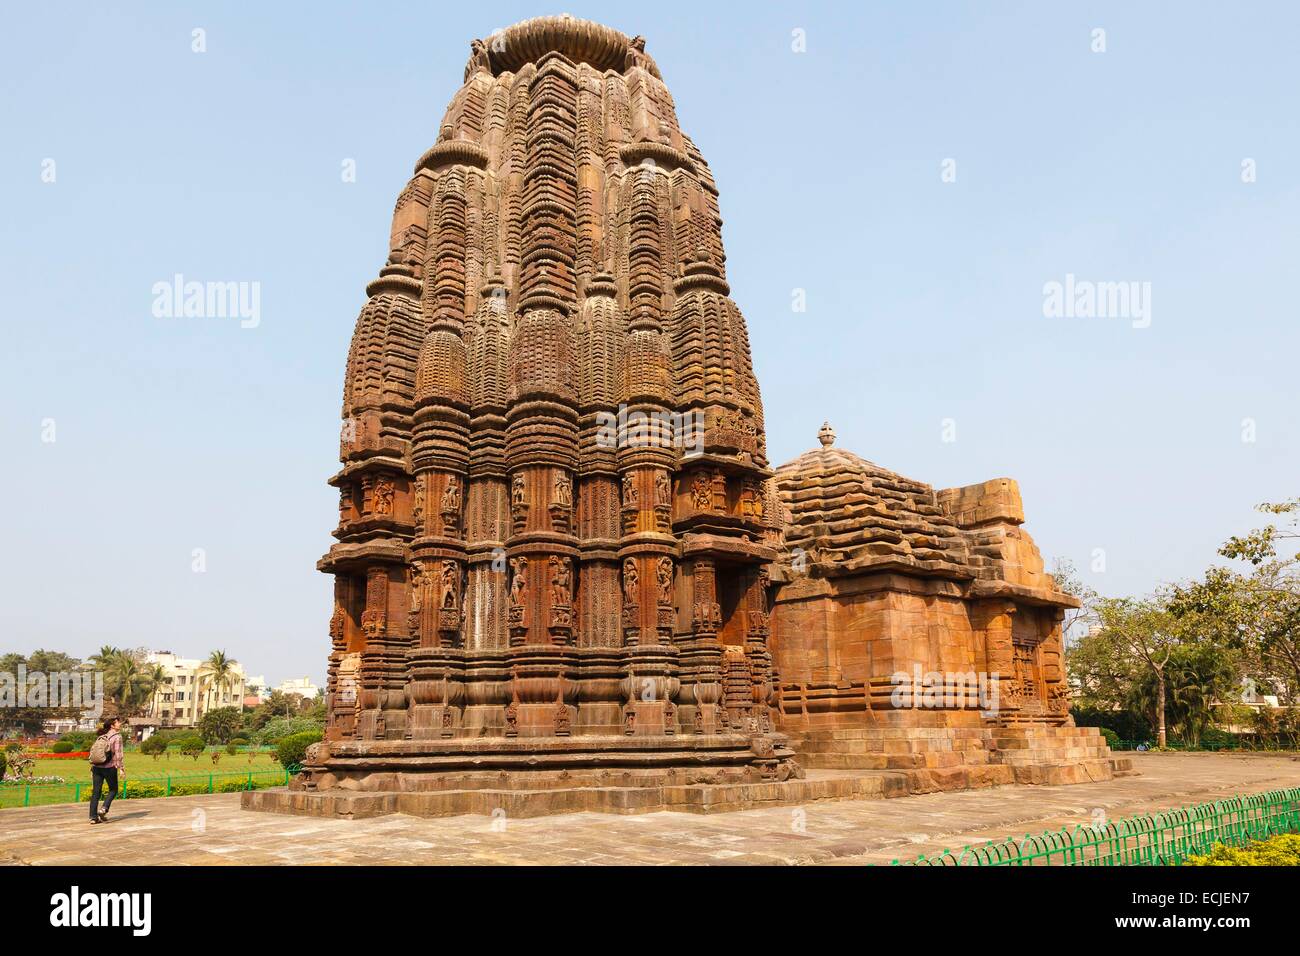 India, Odisha, Bhubaneswar, templo Rajarani fecha 11th-12th century Foto de stock